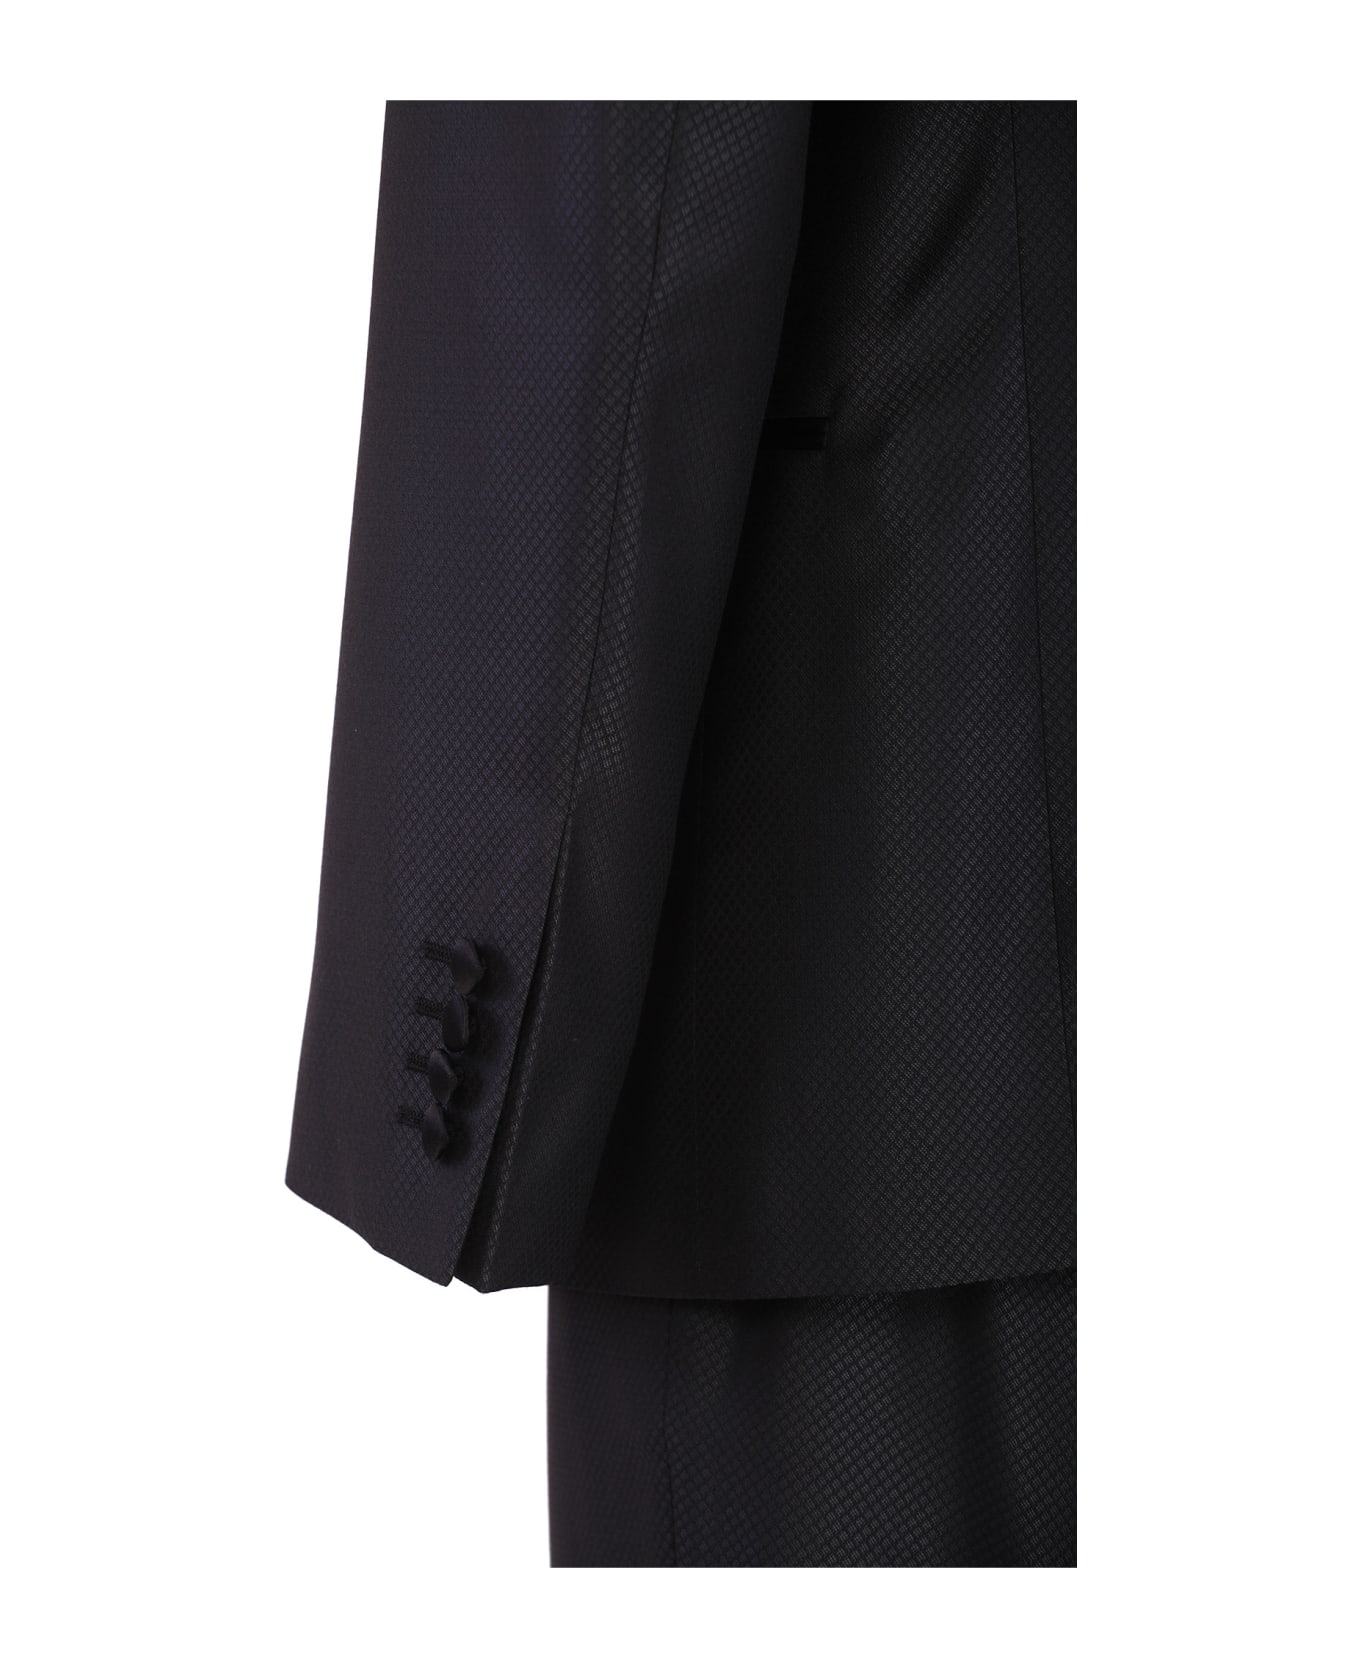 Emporio Armani Dresses Anthracite - Anthracite スーツ